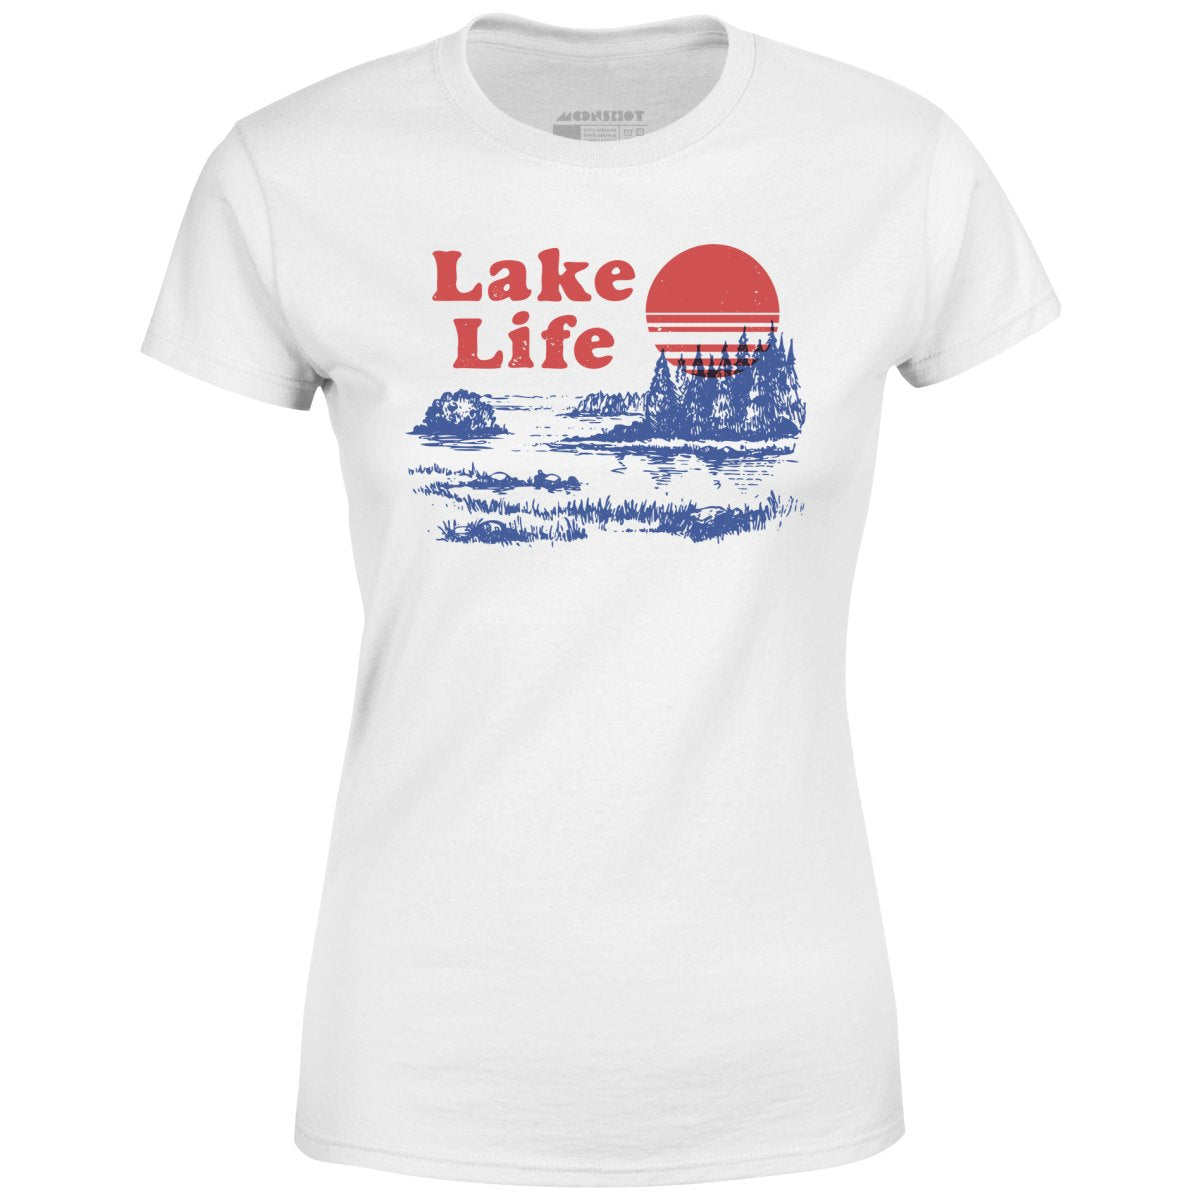 Lake Life - Women's T-Shirt